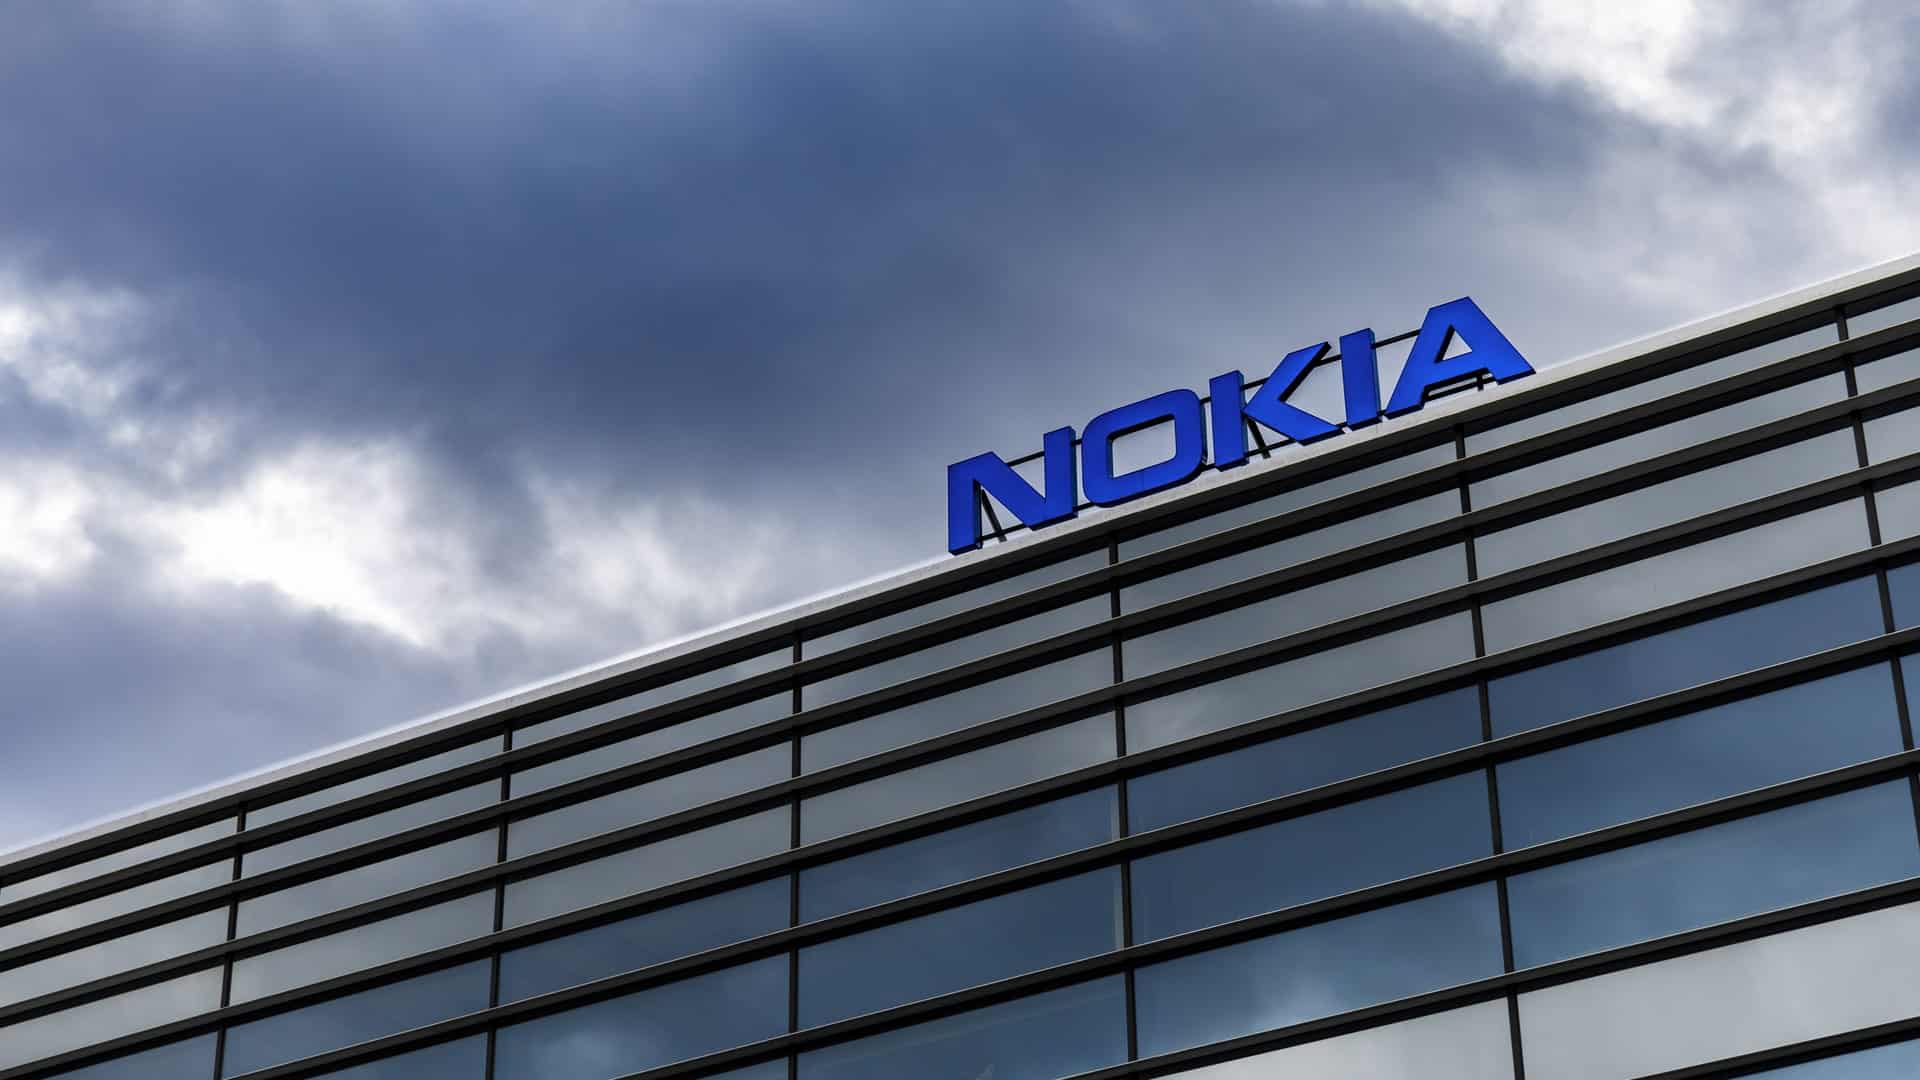 Nokia testuje blockchain